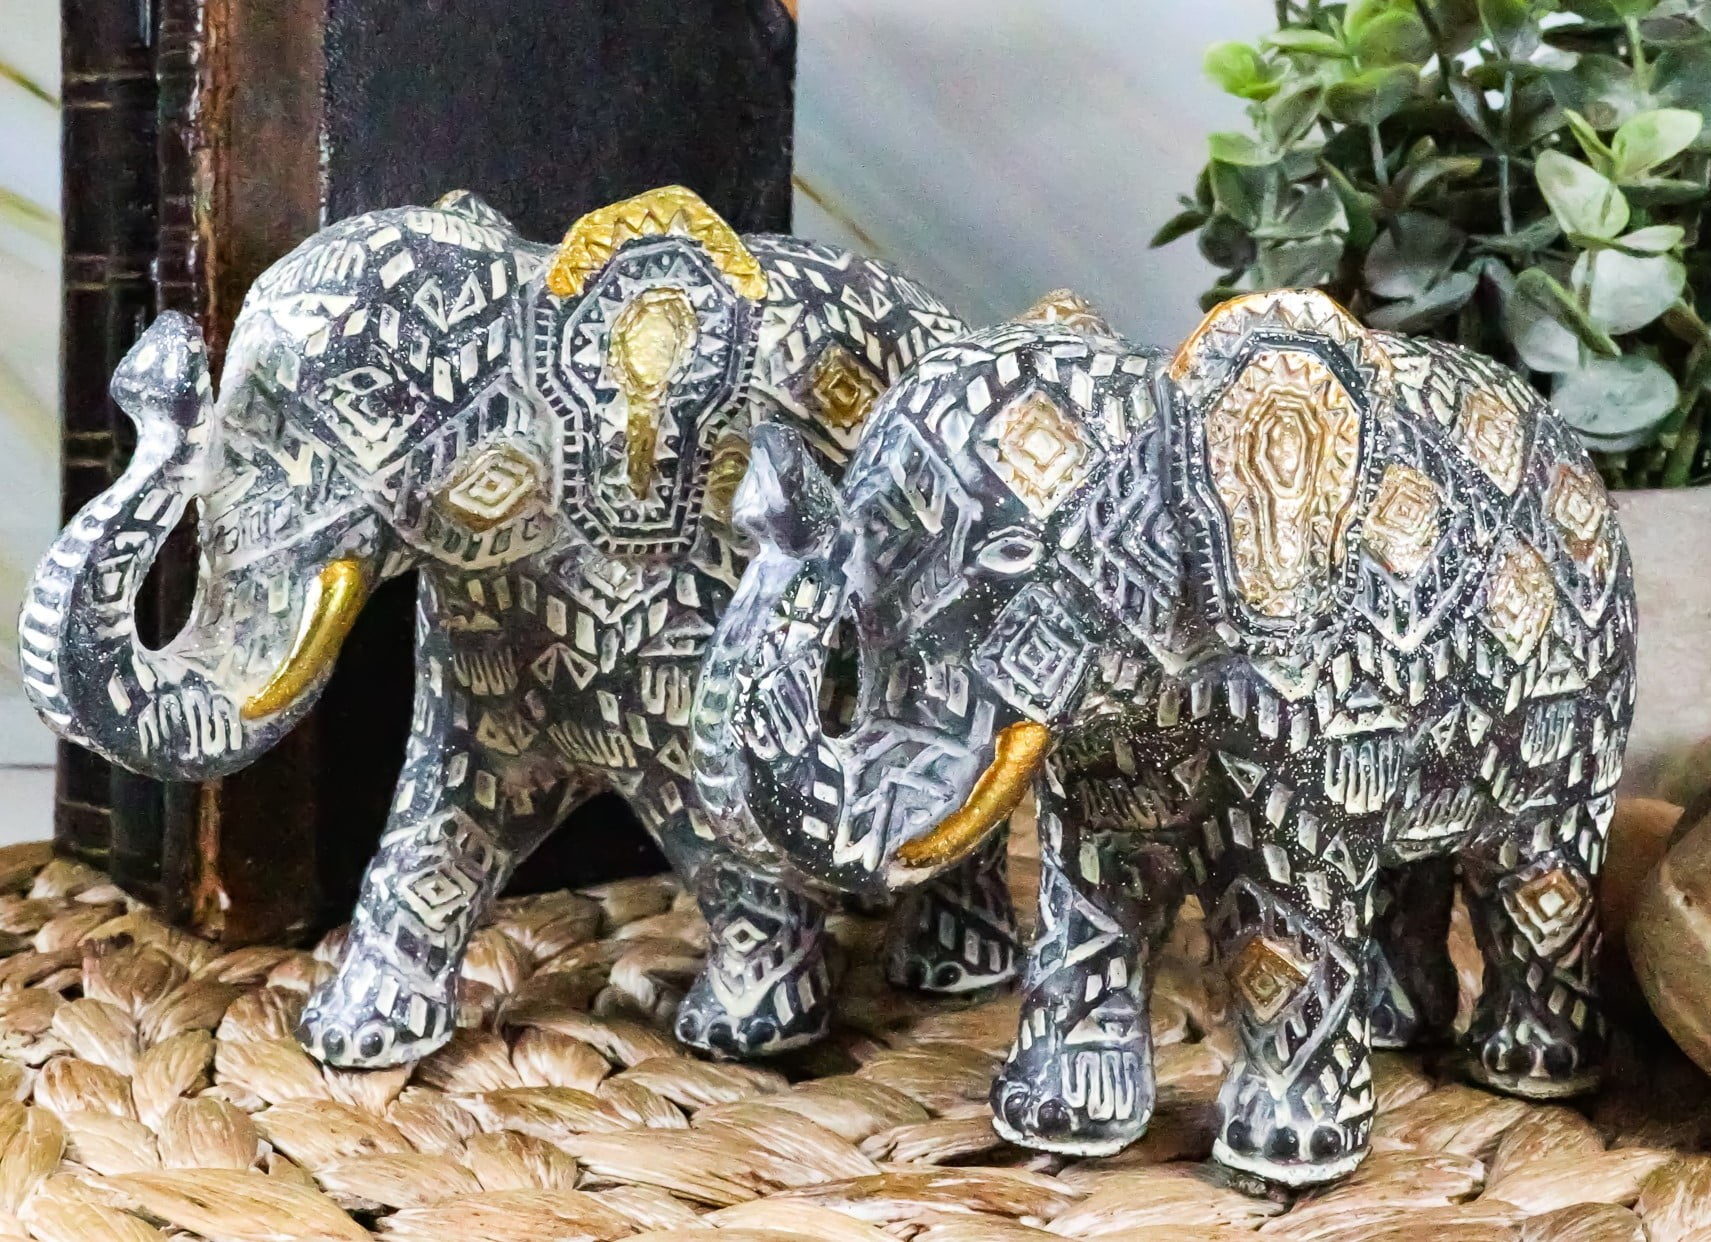 EVERSPRING Elephant Carved Wood Look Figurine Resin 10.25 Inch Long